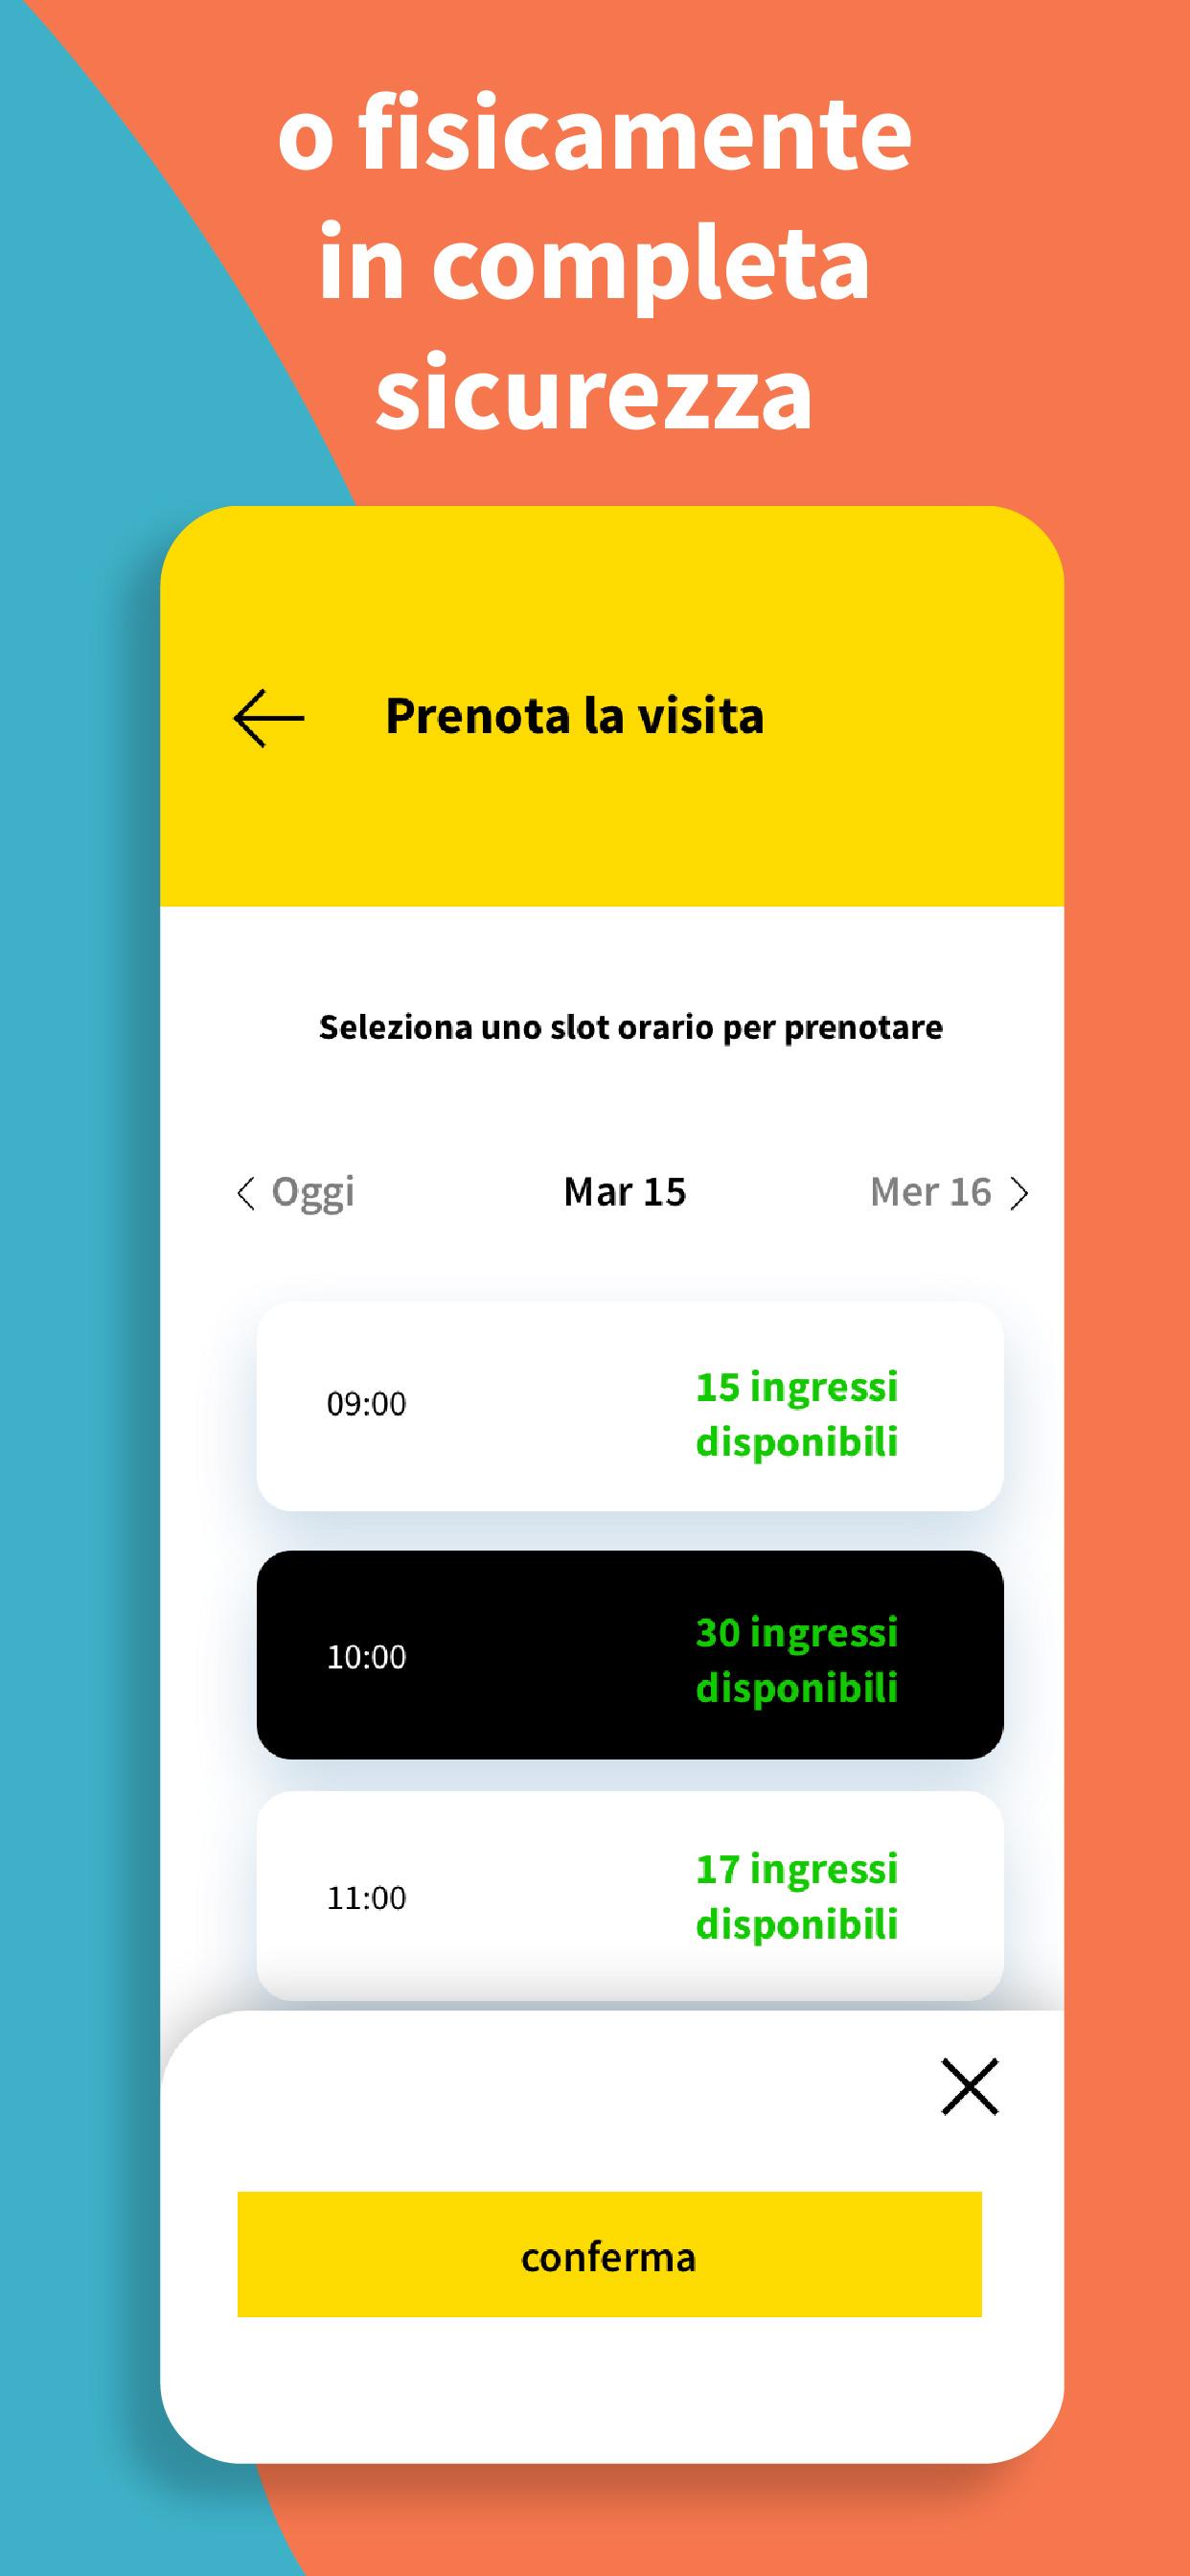 Parma 2020+21 2.0.8 Screenshot 5